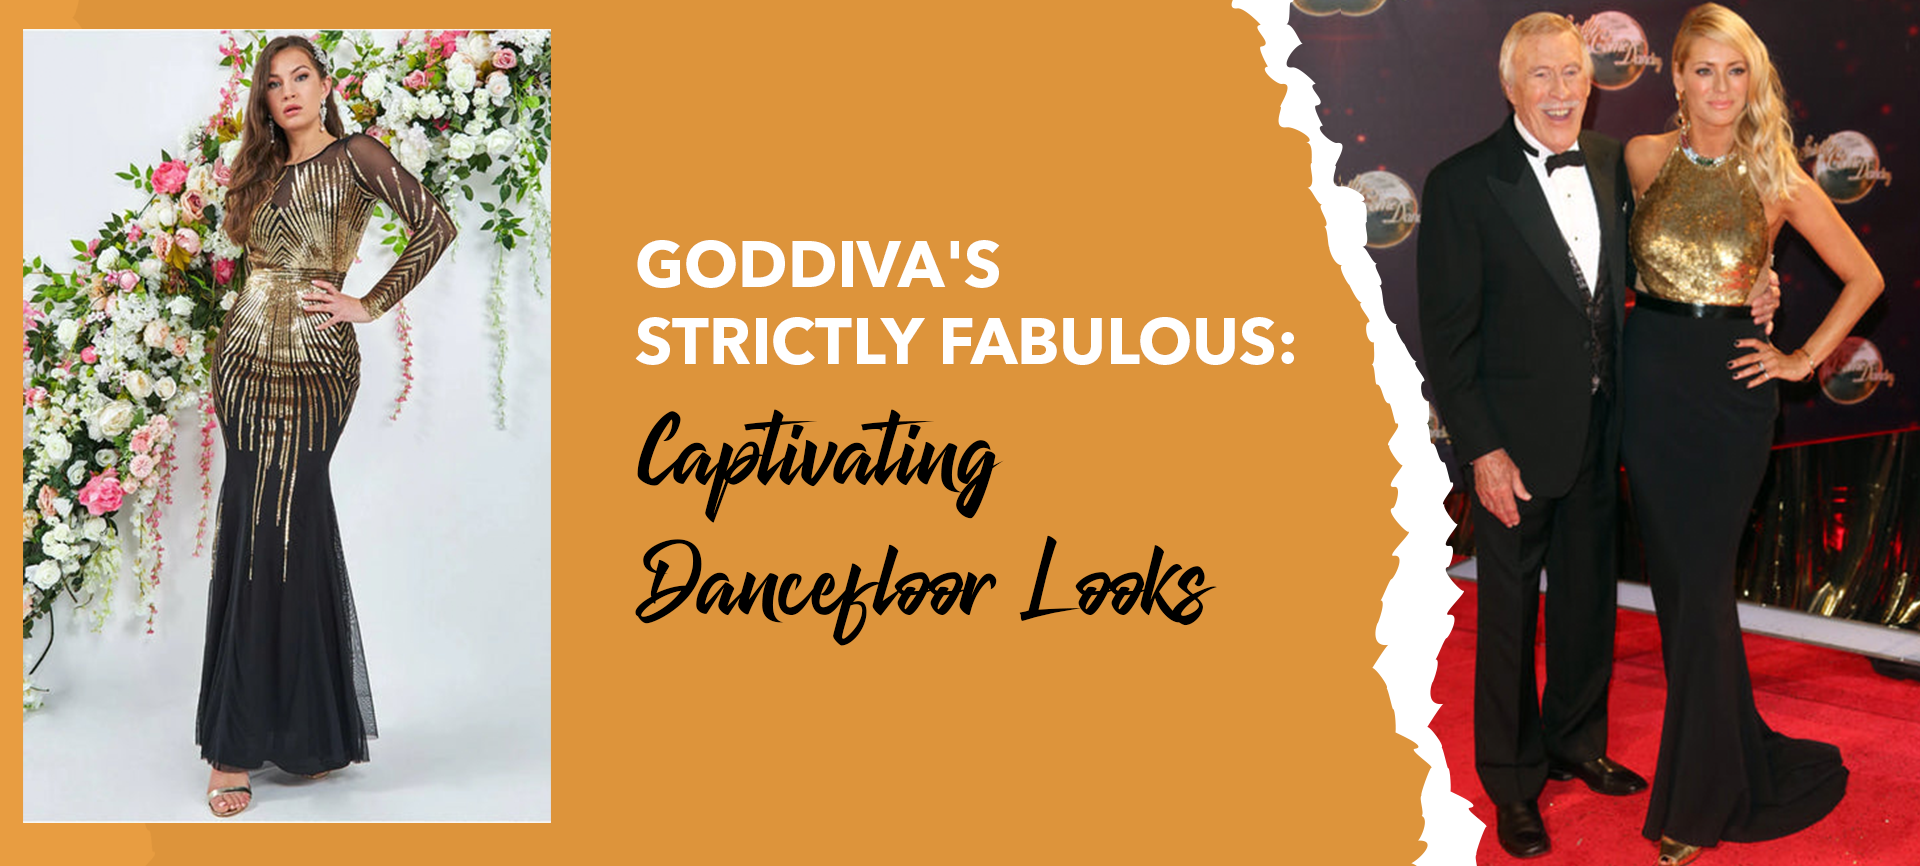 Goddiva's Strictly Fabulous: Captivating Dancefloor Looks